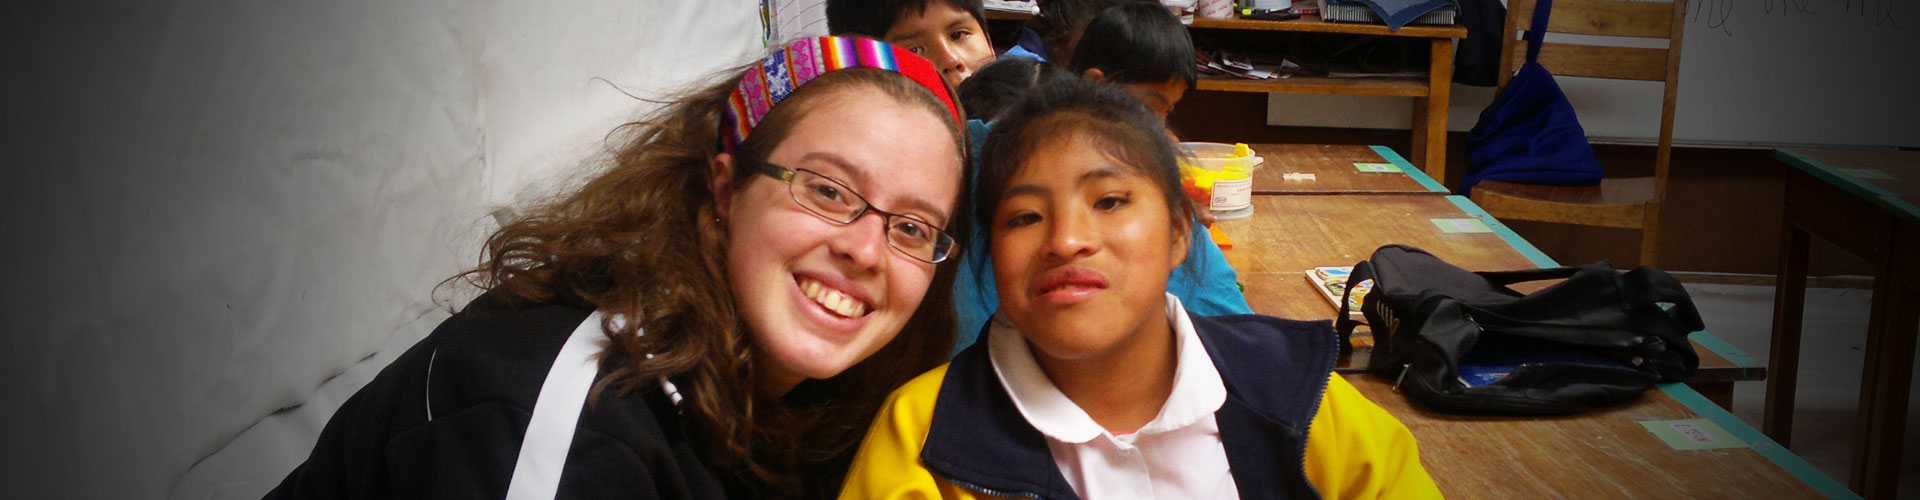 Volunteer in Peru - Cusco For Disabled Care